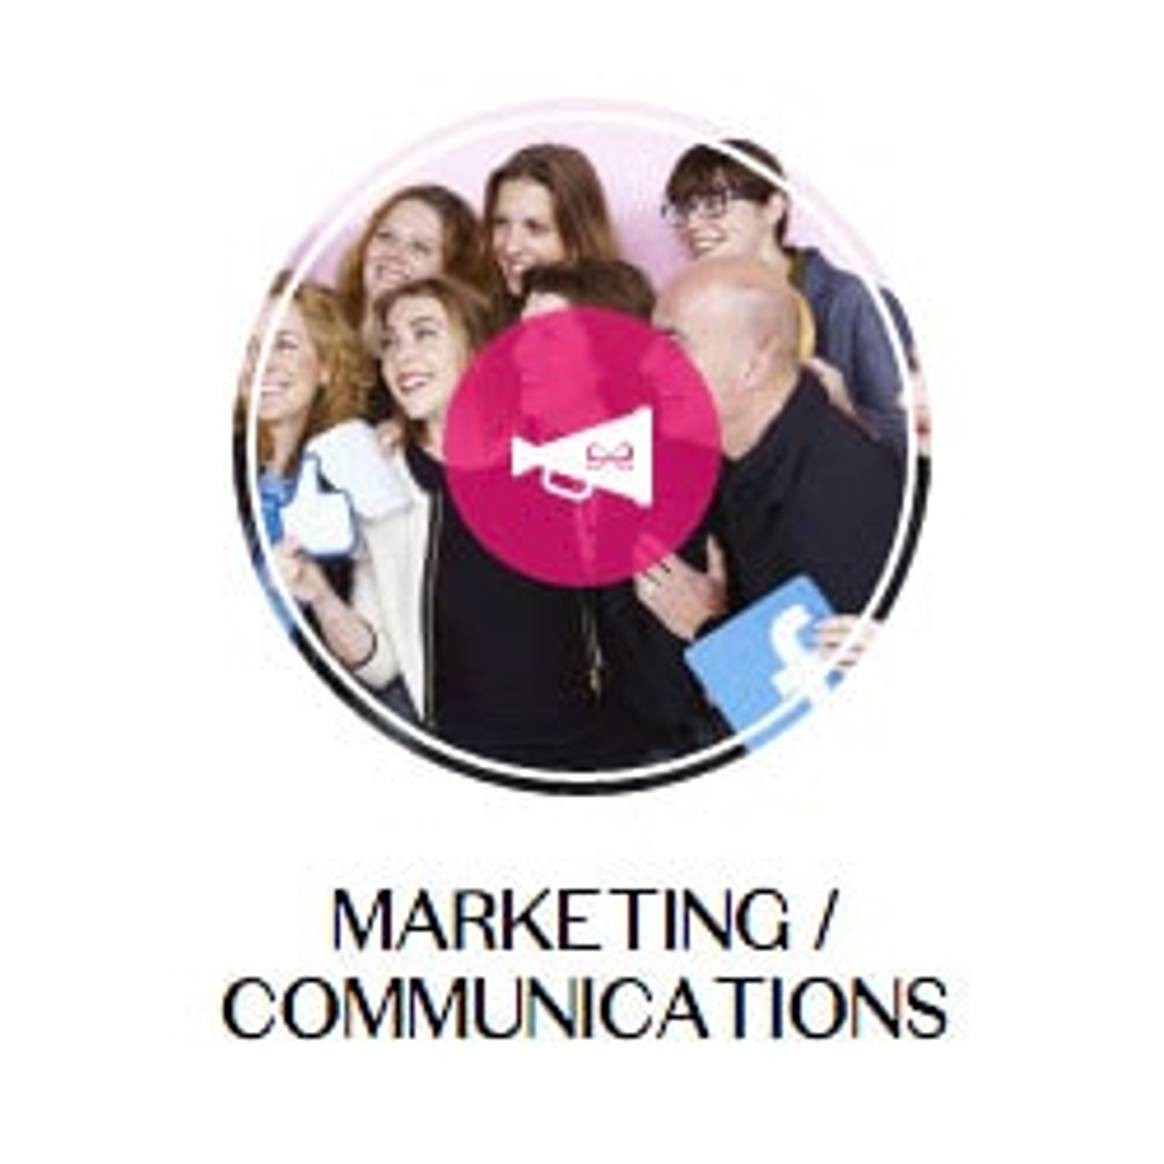 Marketing / Communications